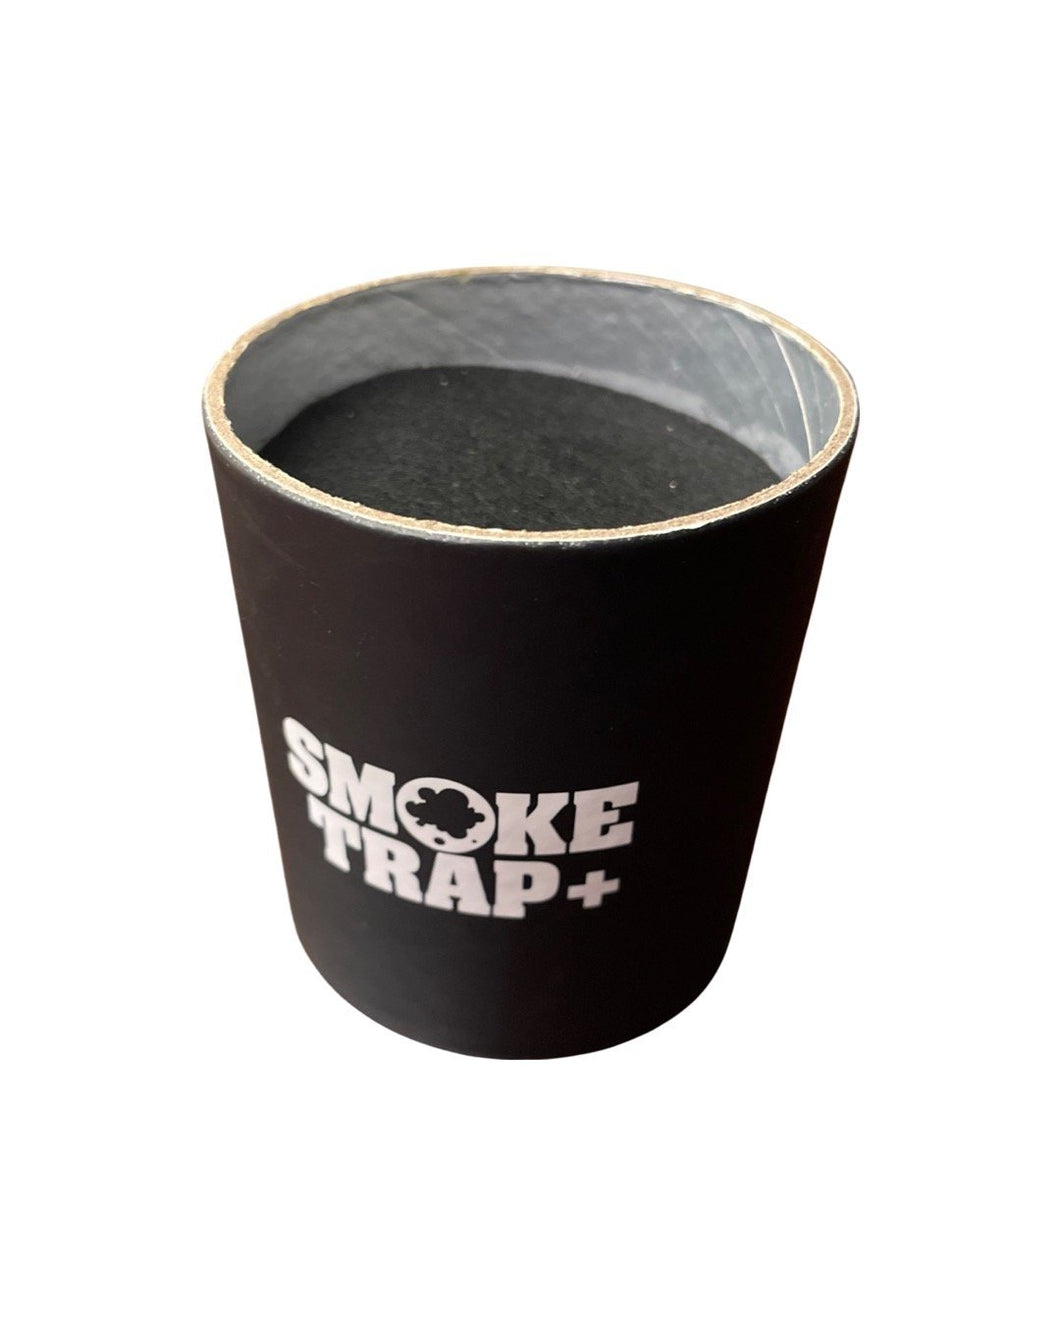 *NEW* Smoke Trap+ - Smoke Trap Filters Single or Pack of 3 - No Smoke No  Smell